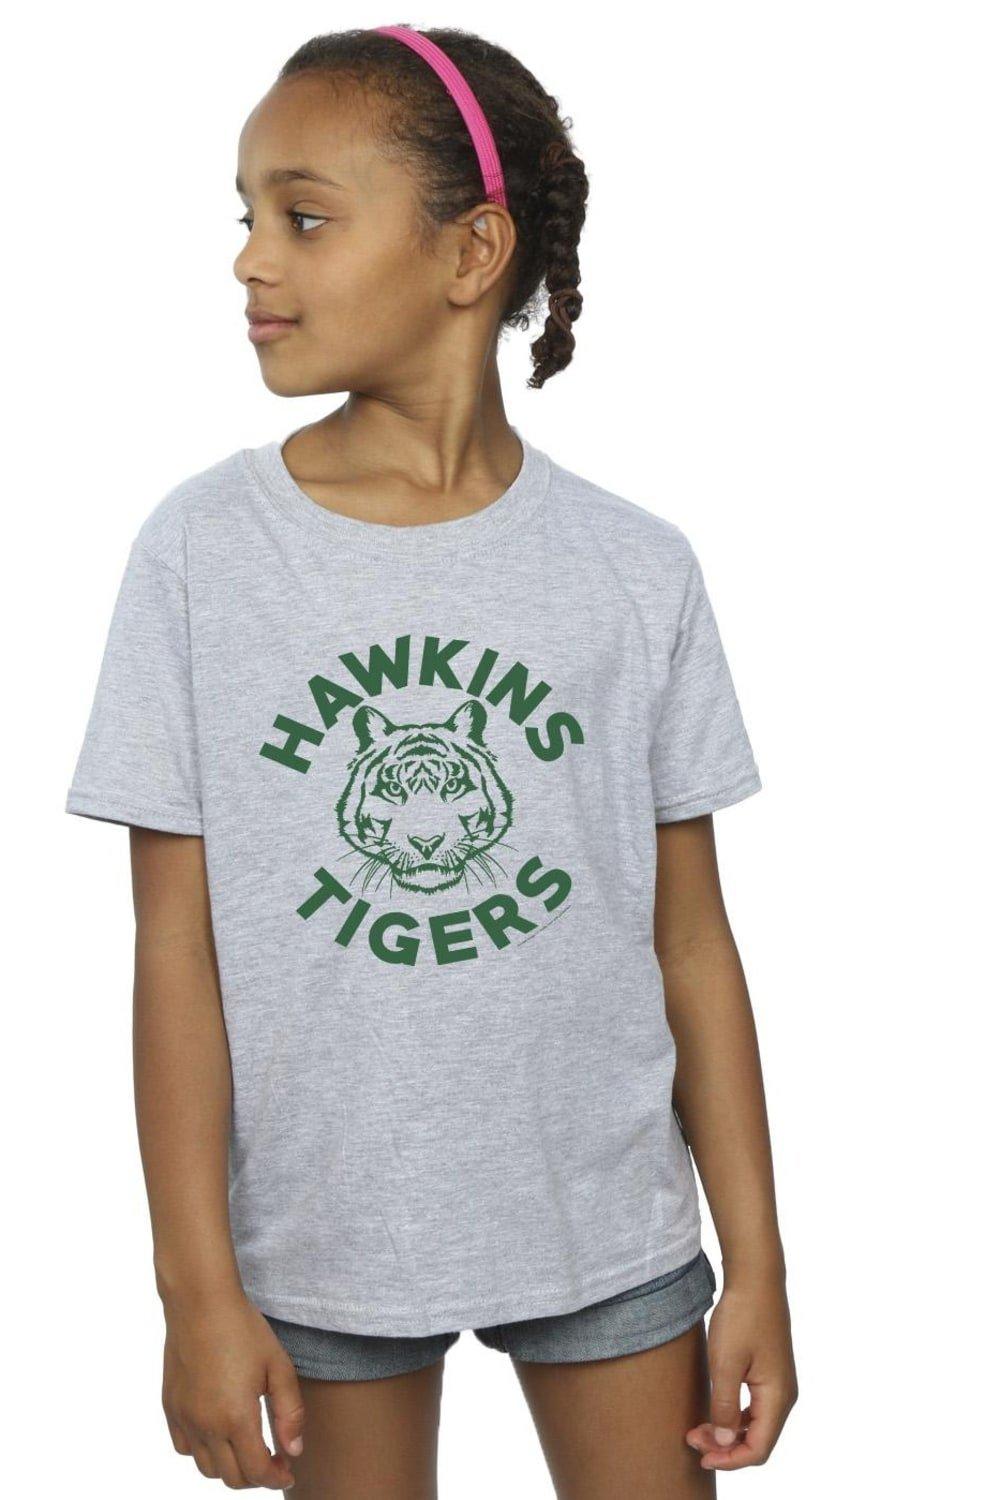 Stranger Things Hawkins Tigers Cotton T-Shirt